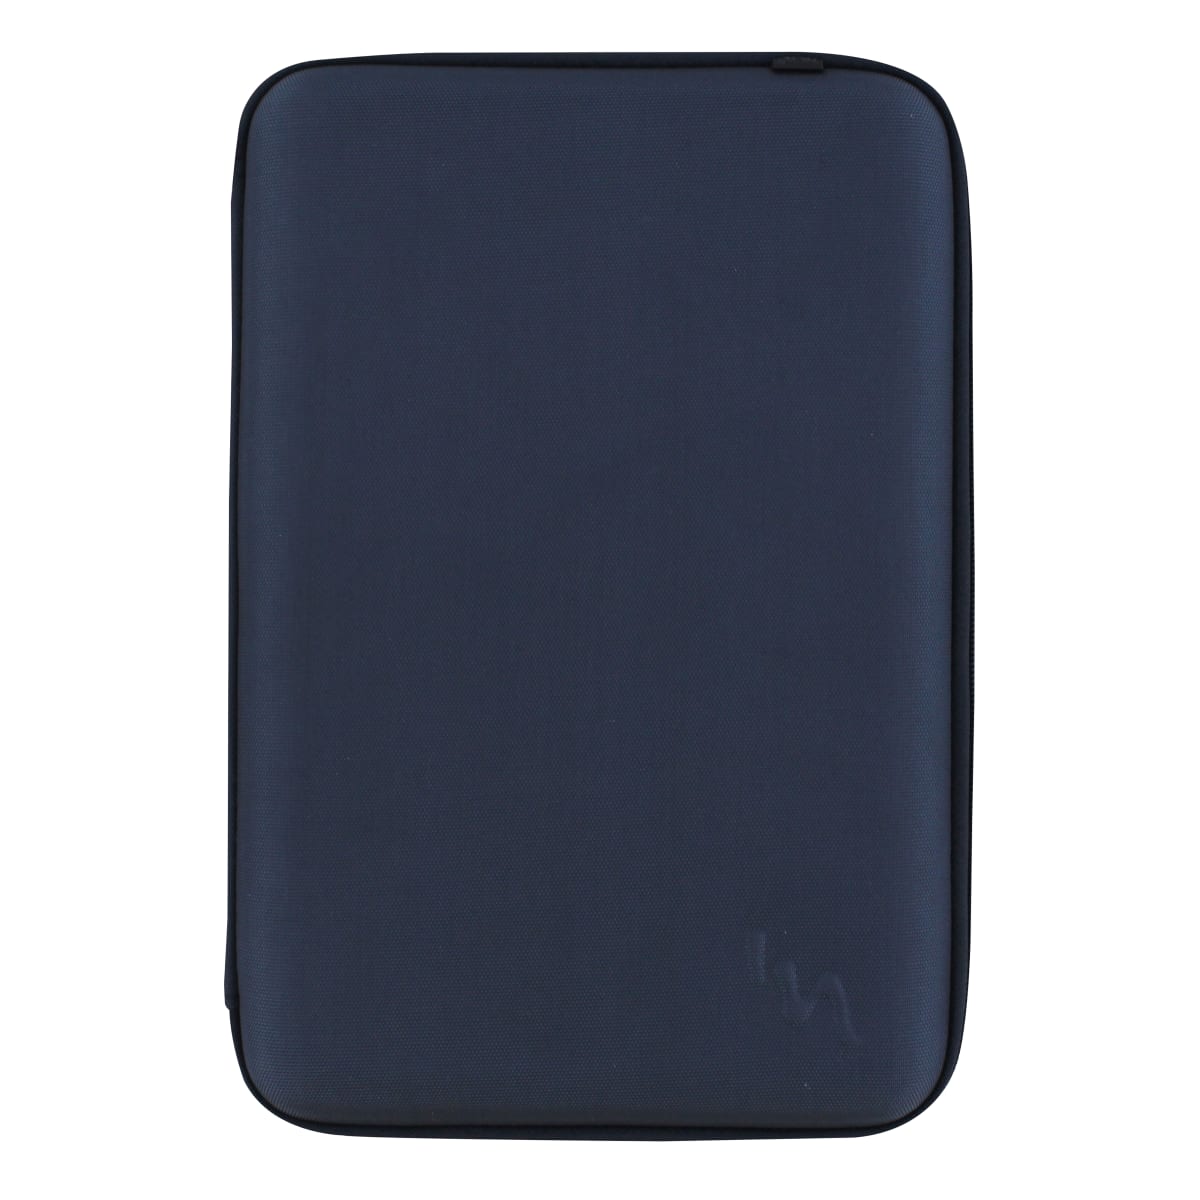 Sleeve for tablet 7" SUBLIM blue - Kindle e-reader compatible